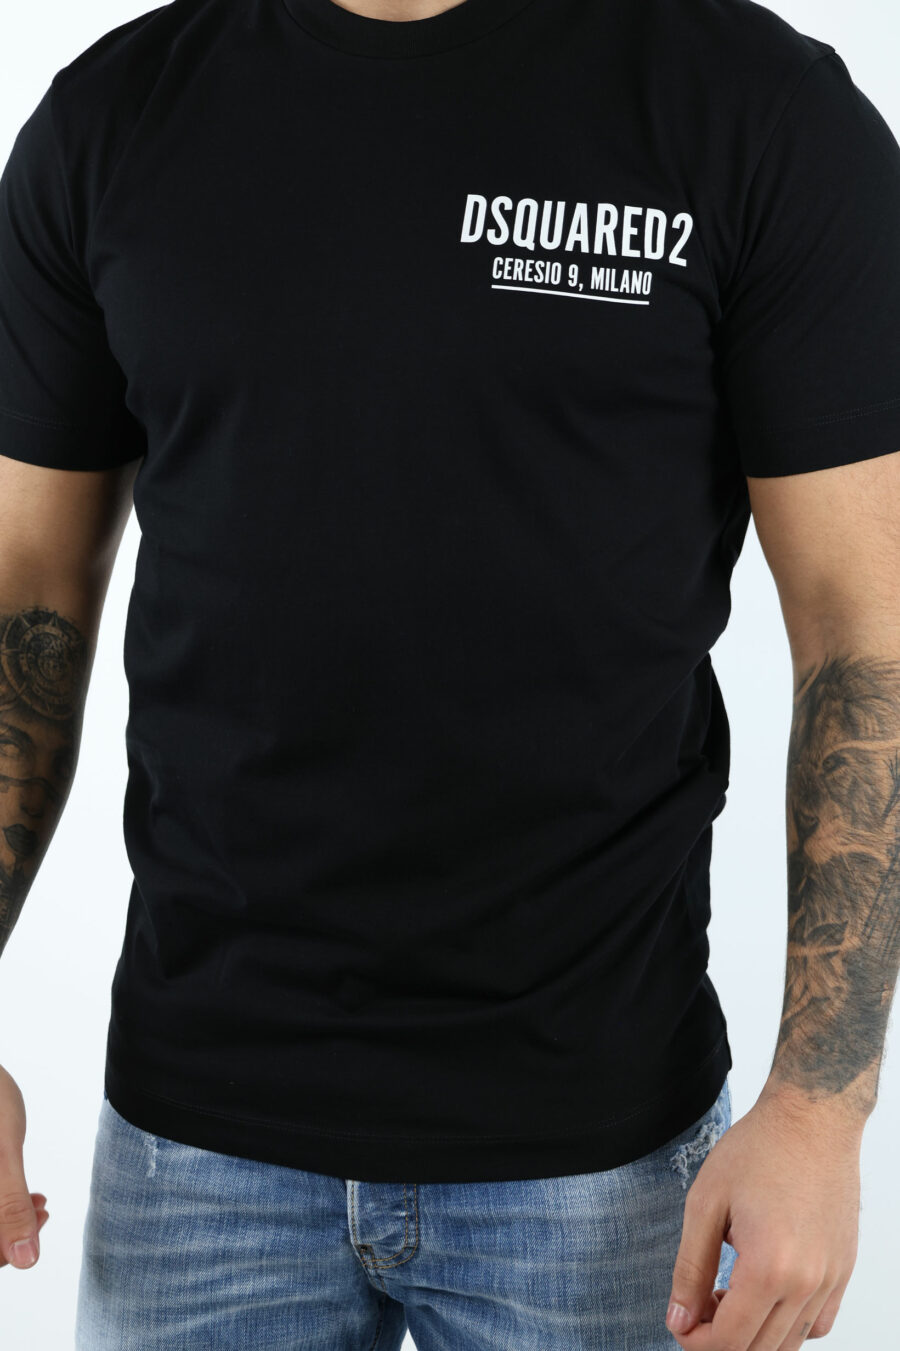 Schwarzes T-shirt mit Minilogo "ceresio 9, milano" - 106878